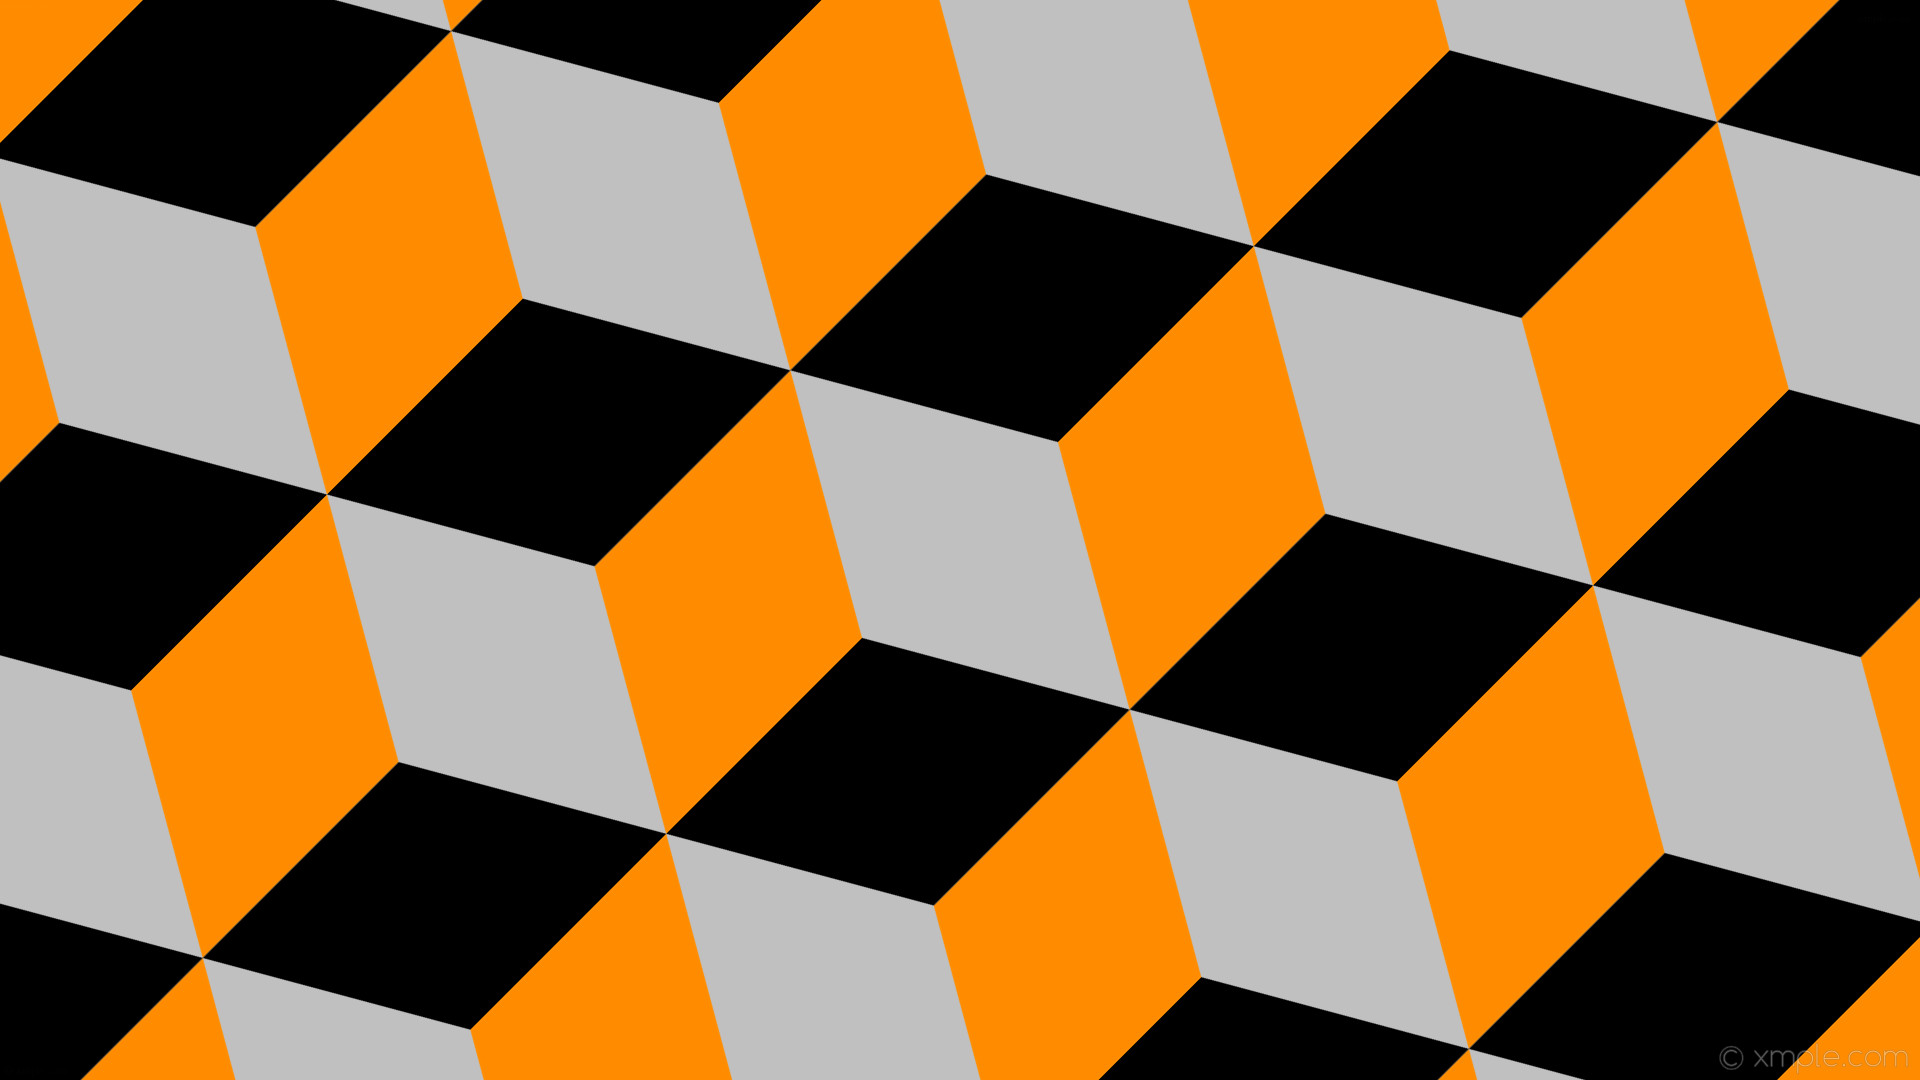 1920x1080 wallpaper grey 3d cubes black orange silver dark orange #c0c0c0 #ff8c00  #000000 135